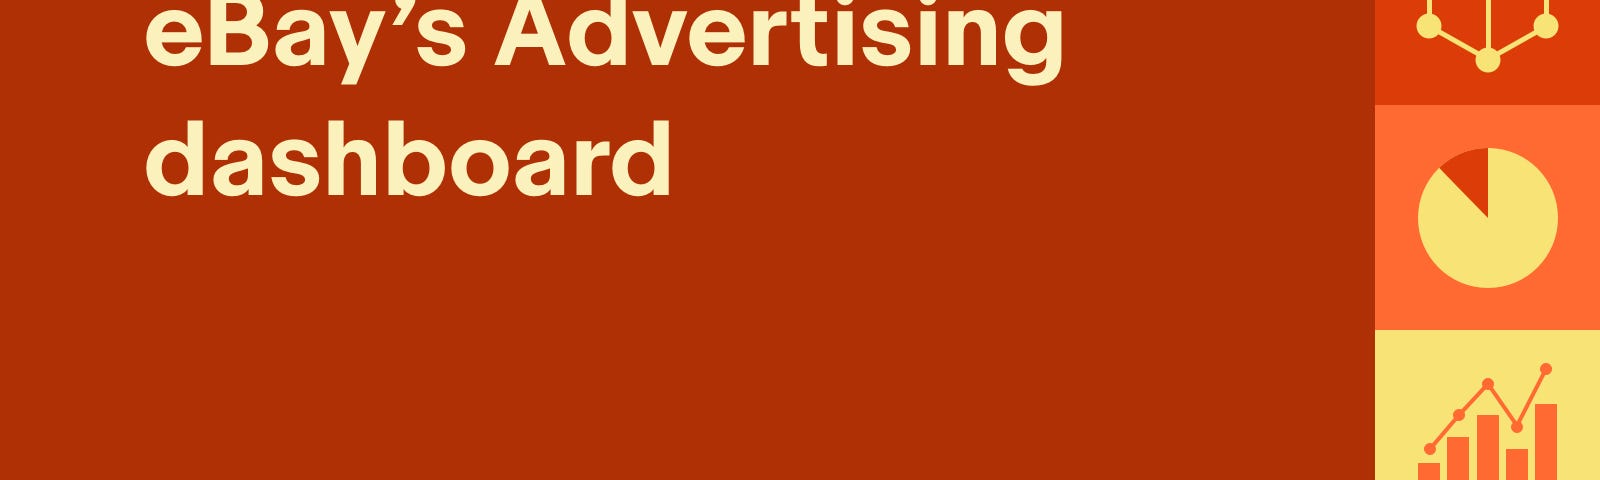 Orange slide with geometric shapes highlighting eBay’s Advertising dashboard